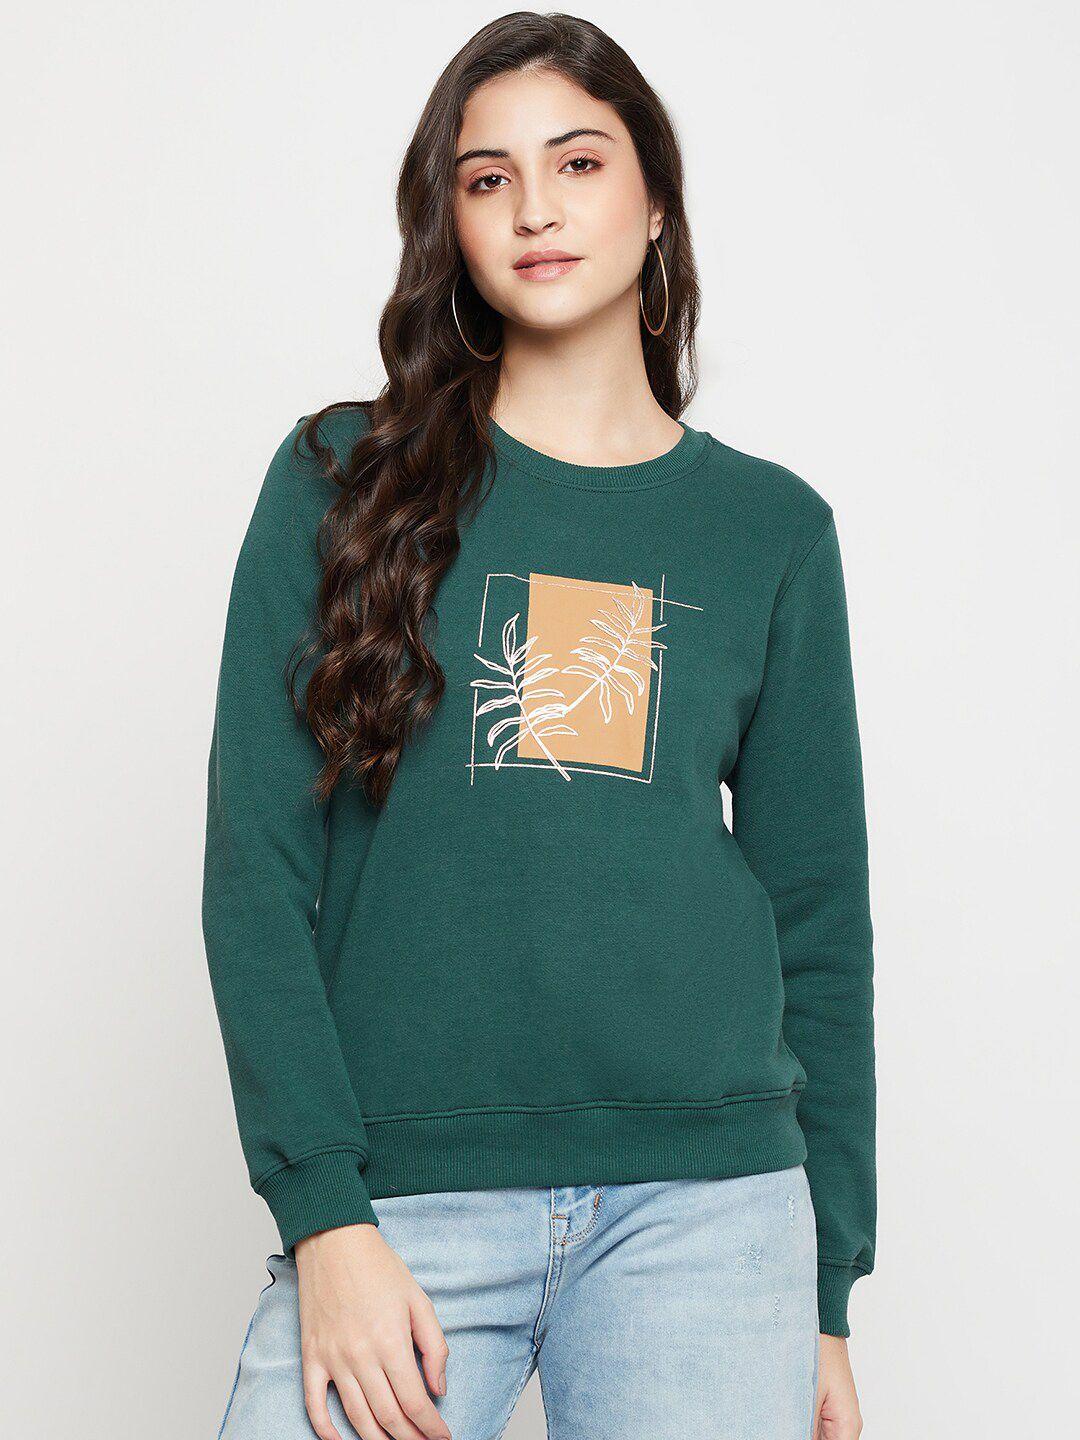 cantabil-floral-printed-hooded-pullover-fleece-sweatshirt